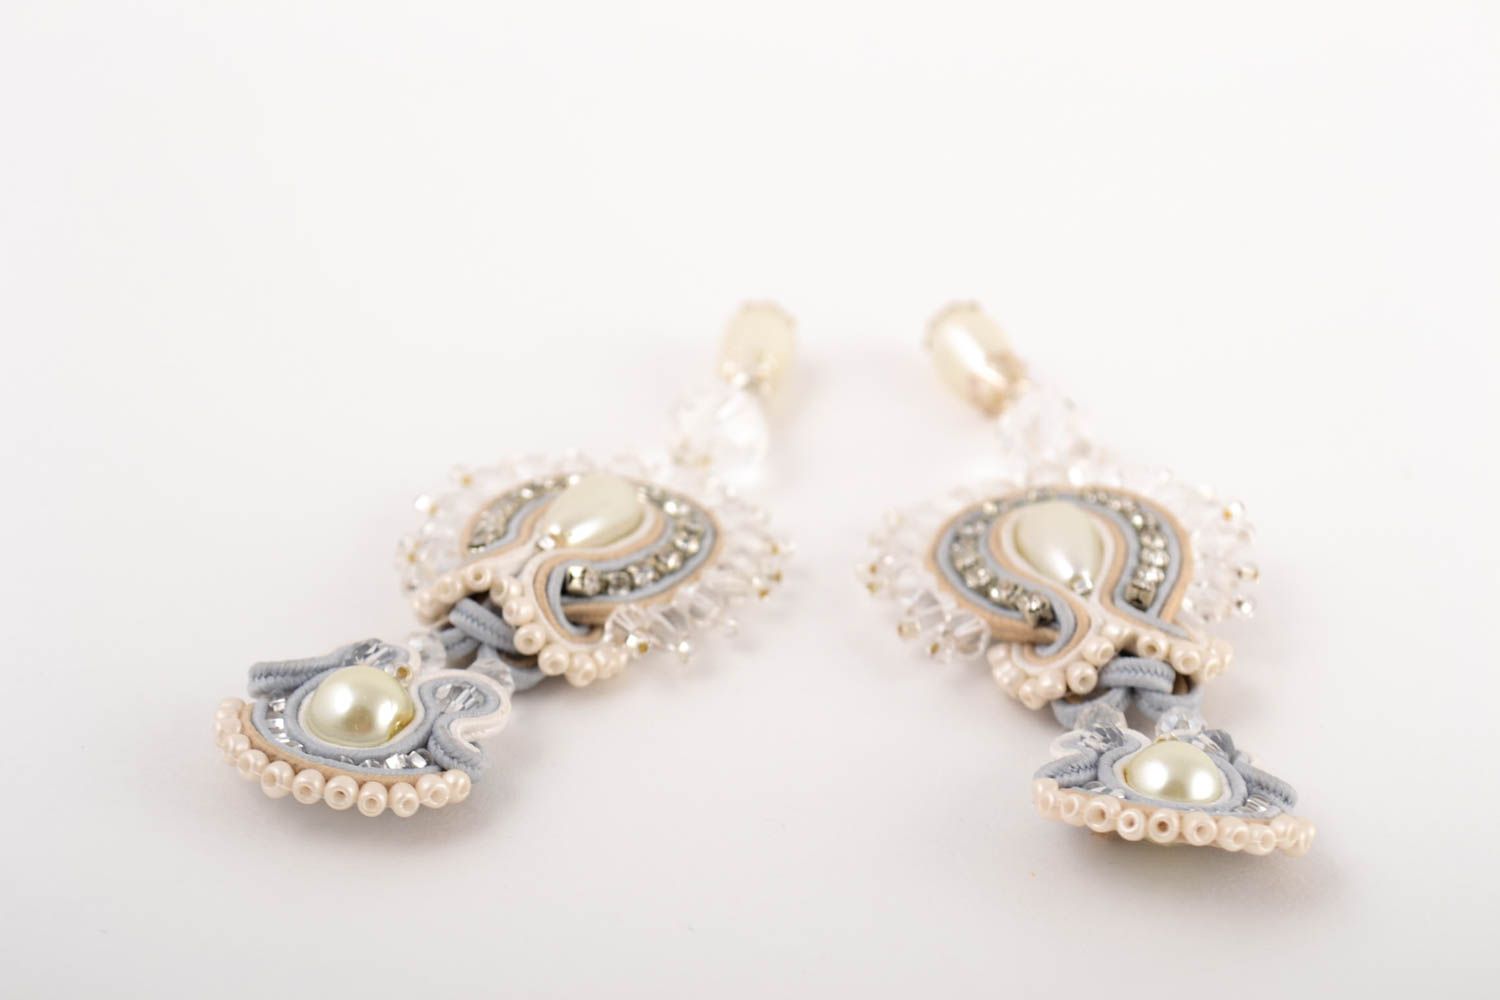 Handmade soutache earrings designer dangling earrings white festive jewelry photo 3